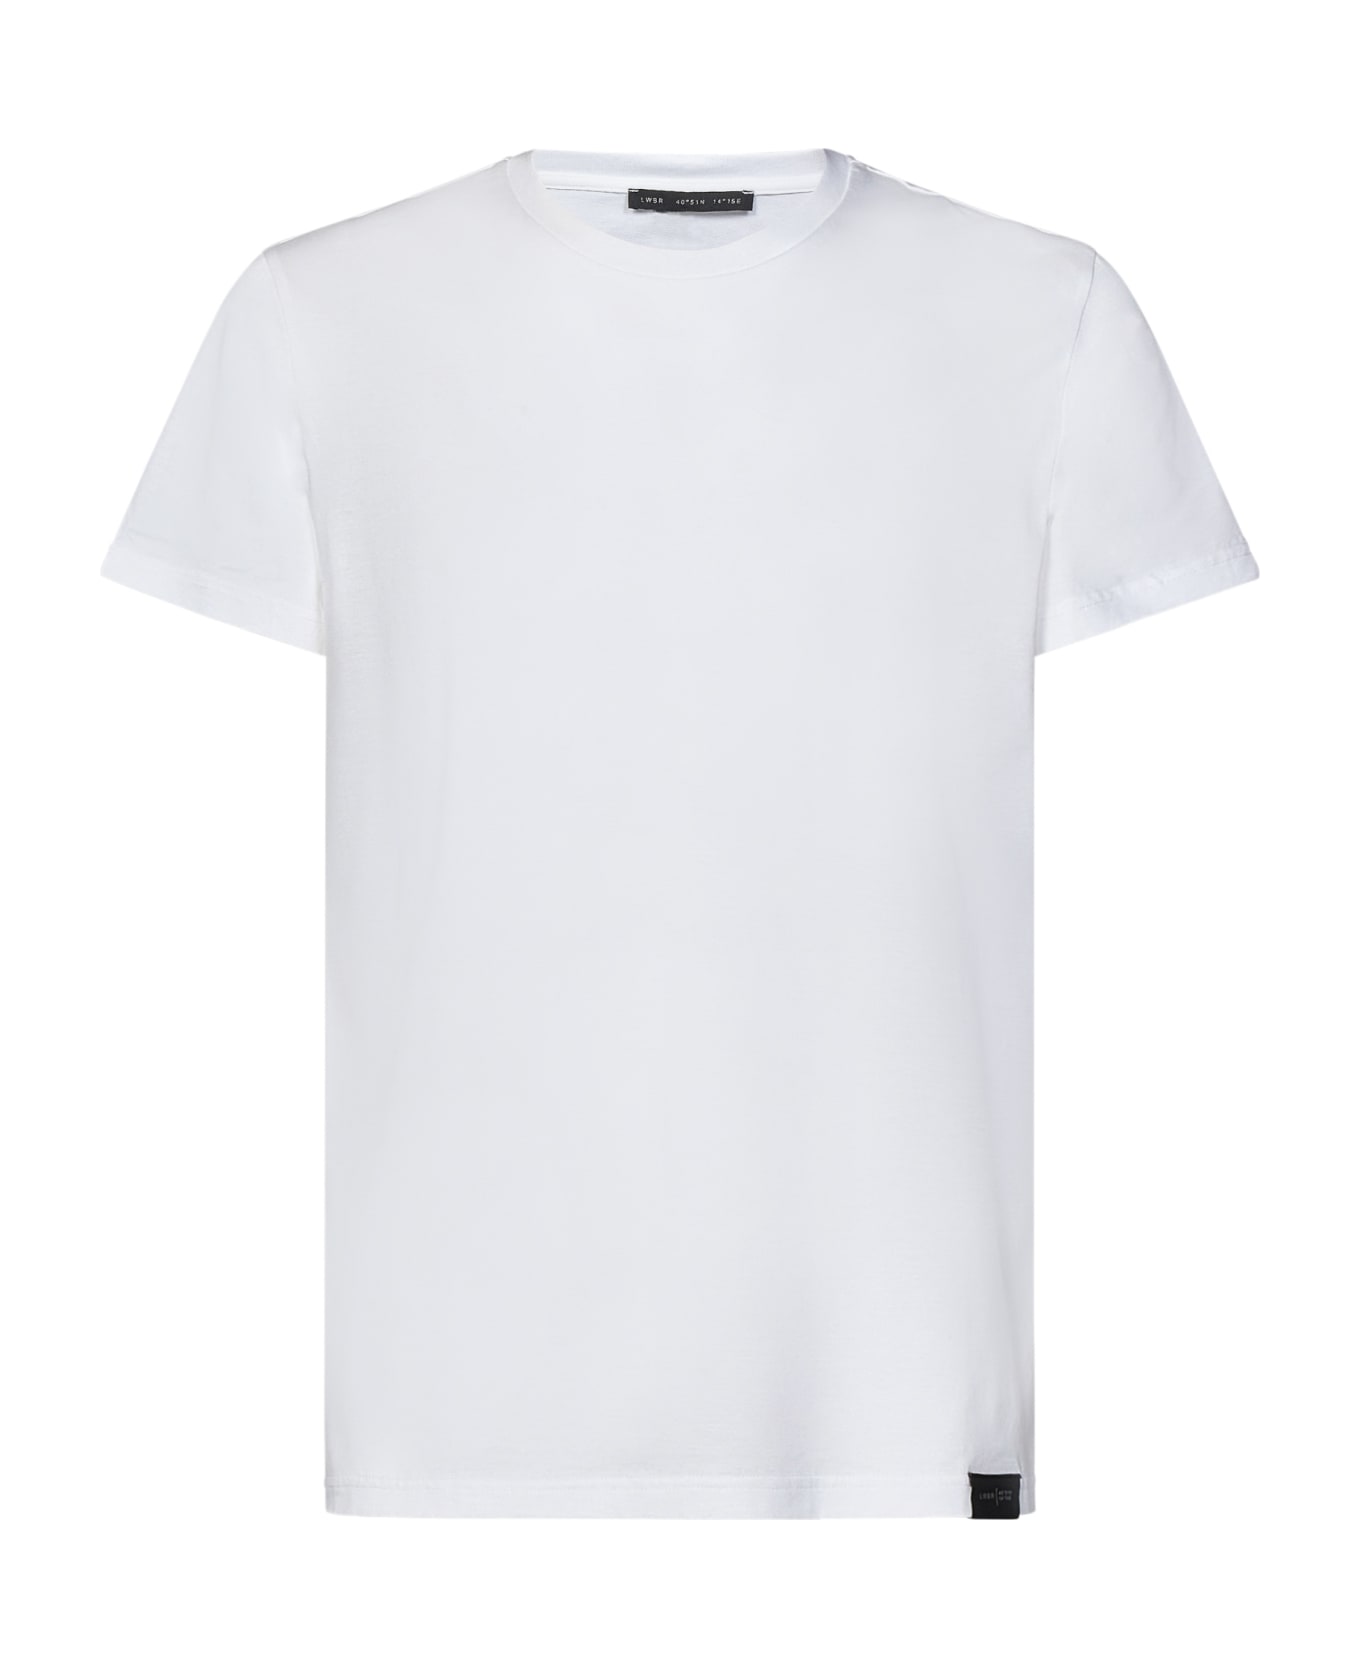 Low Brand T-shirt - White シャツ